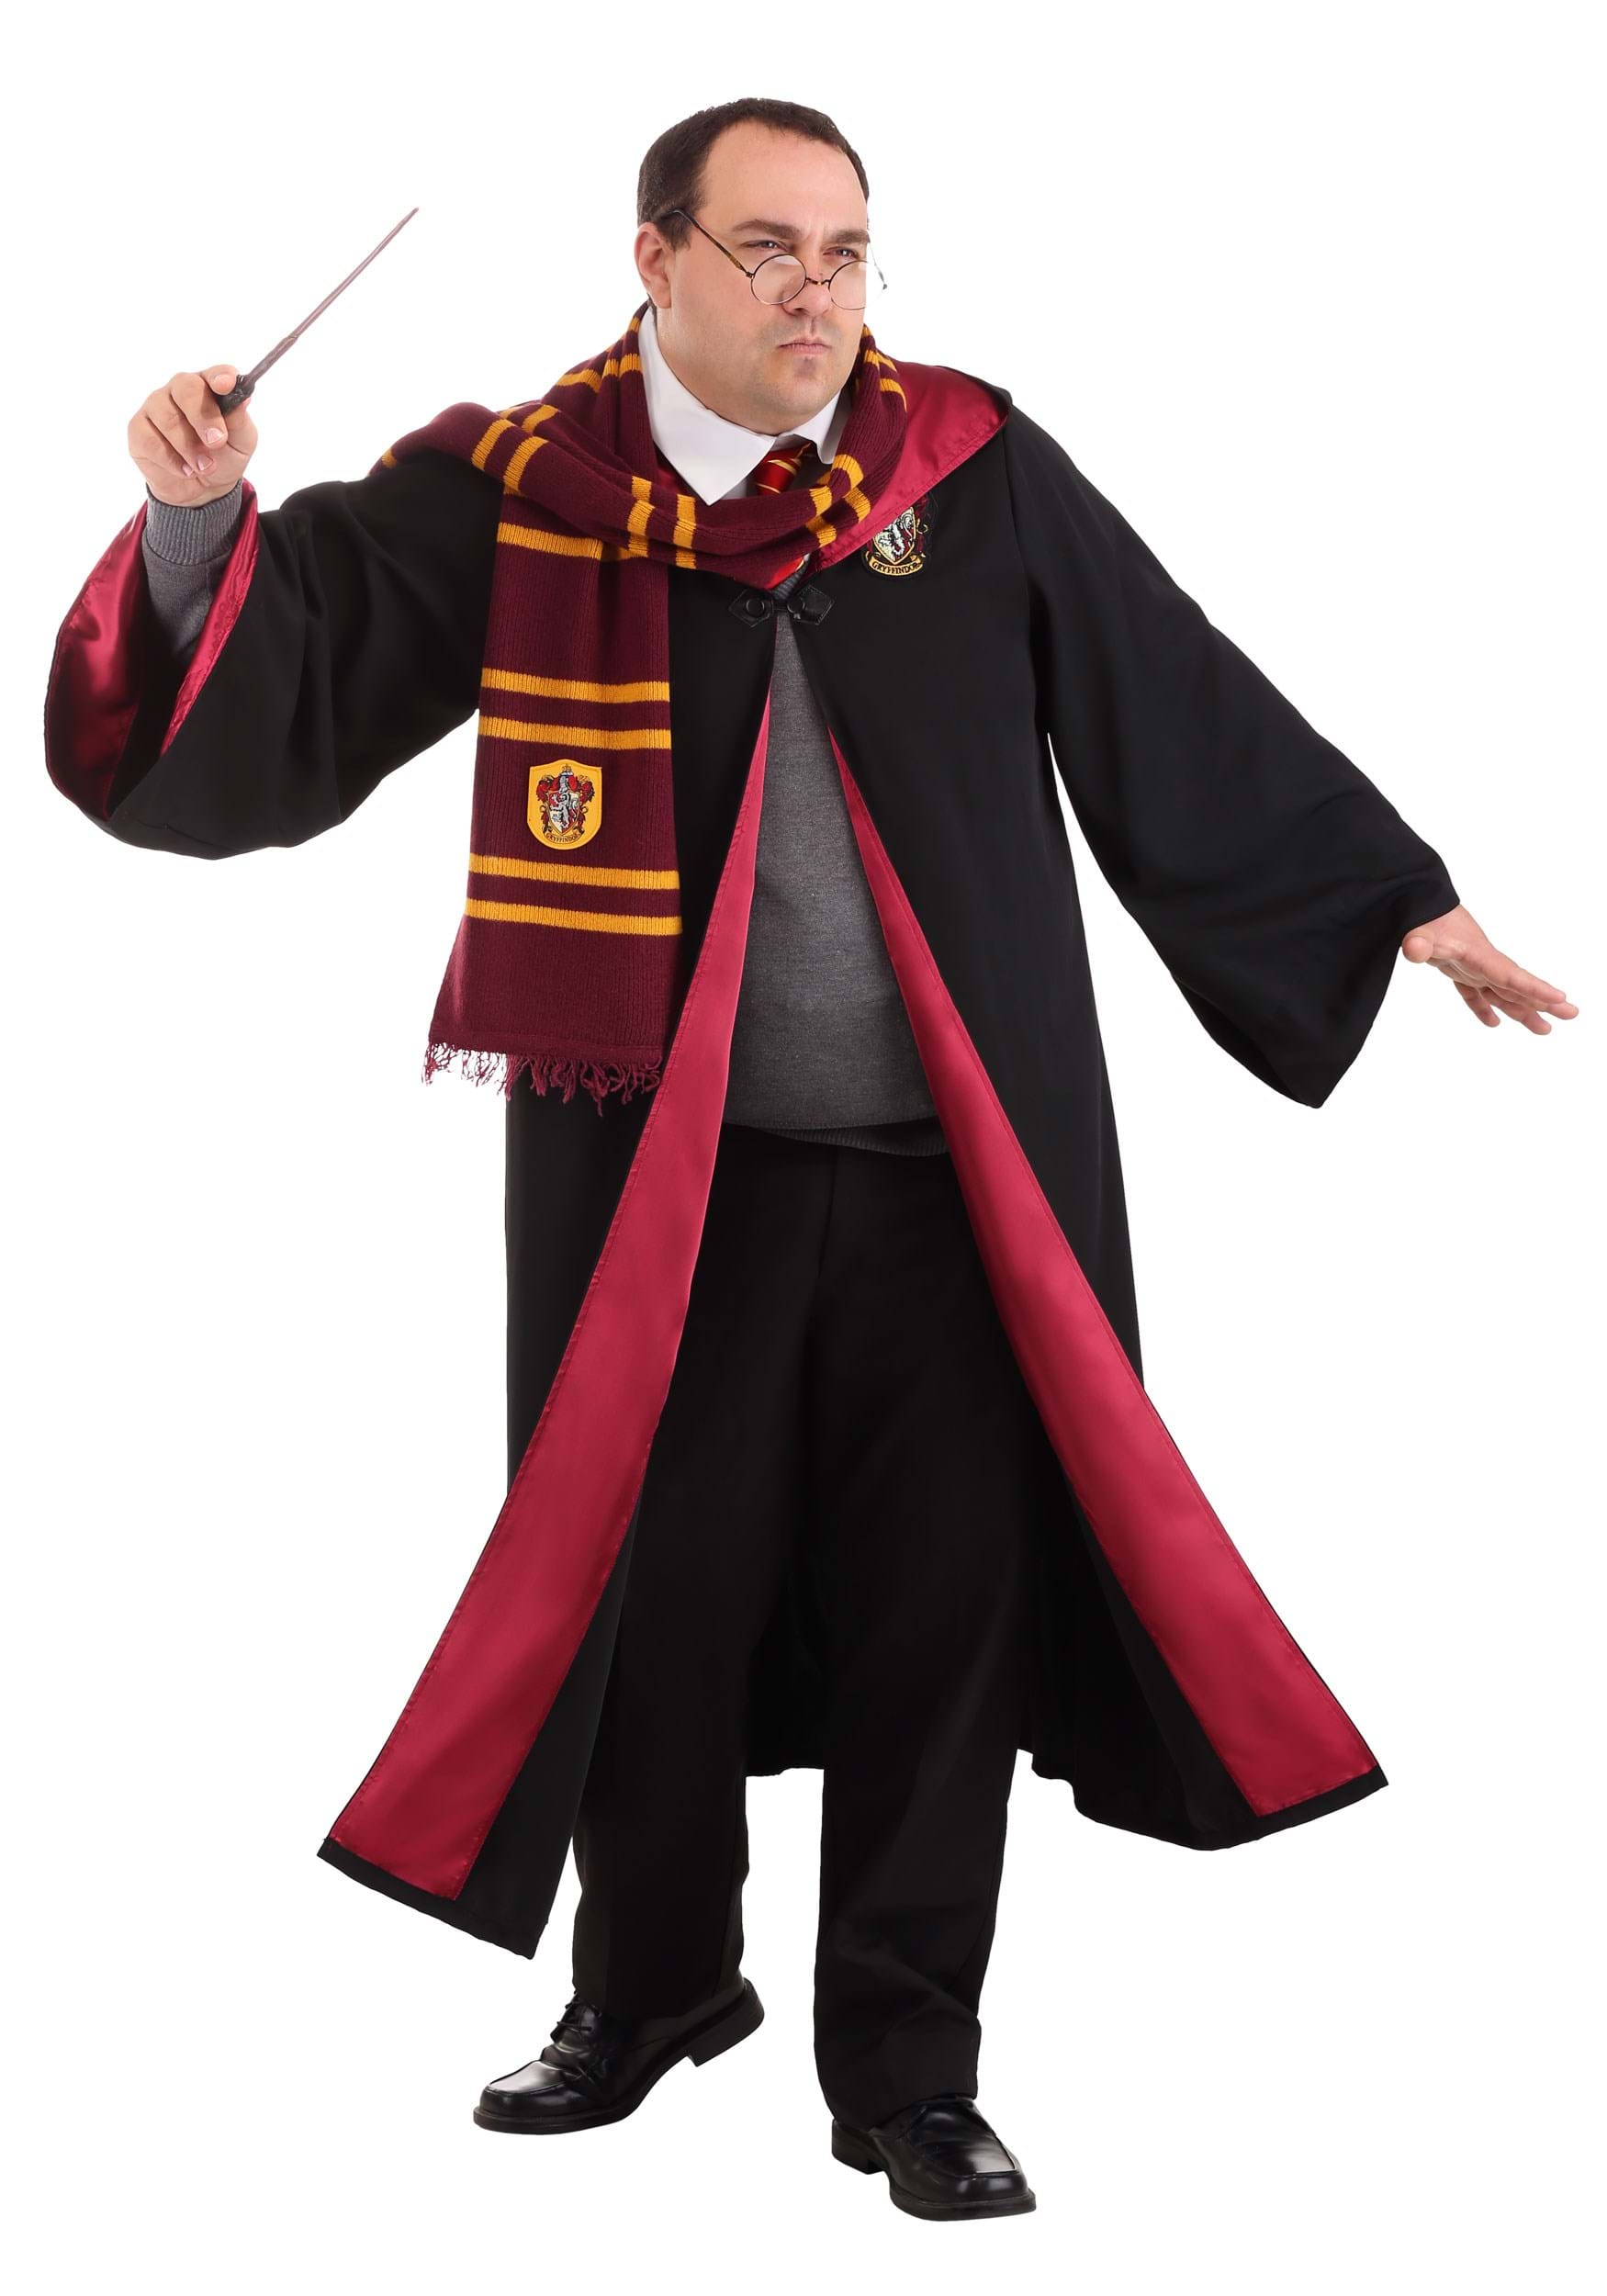 Harry Potter Costume - Fancy Dress Costume Ideas - YouTube